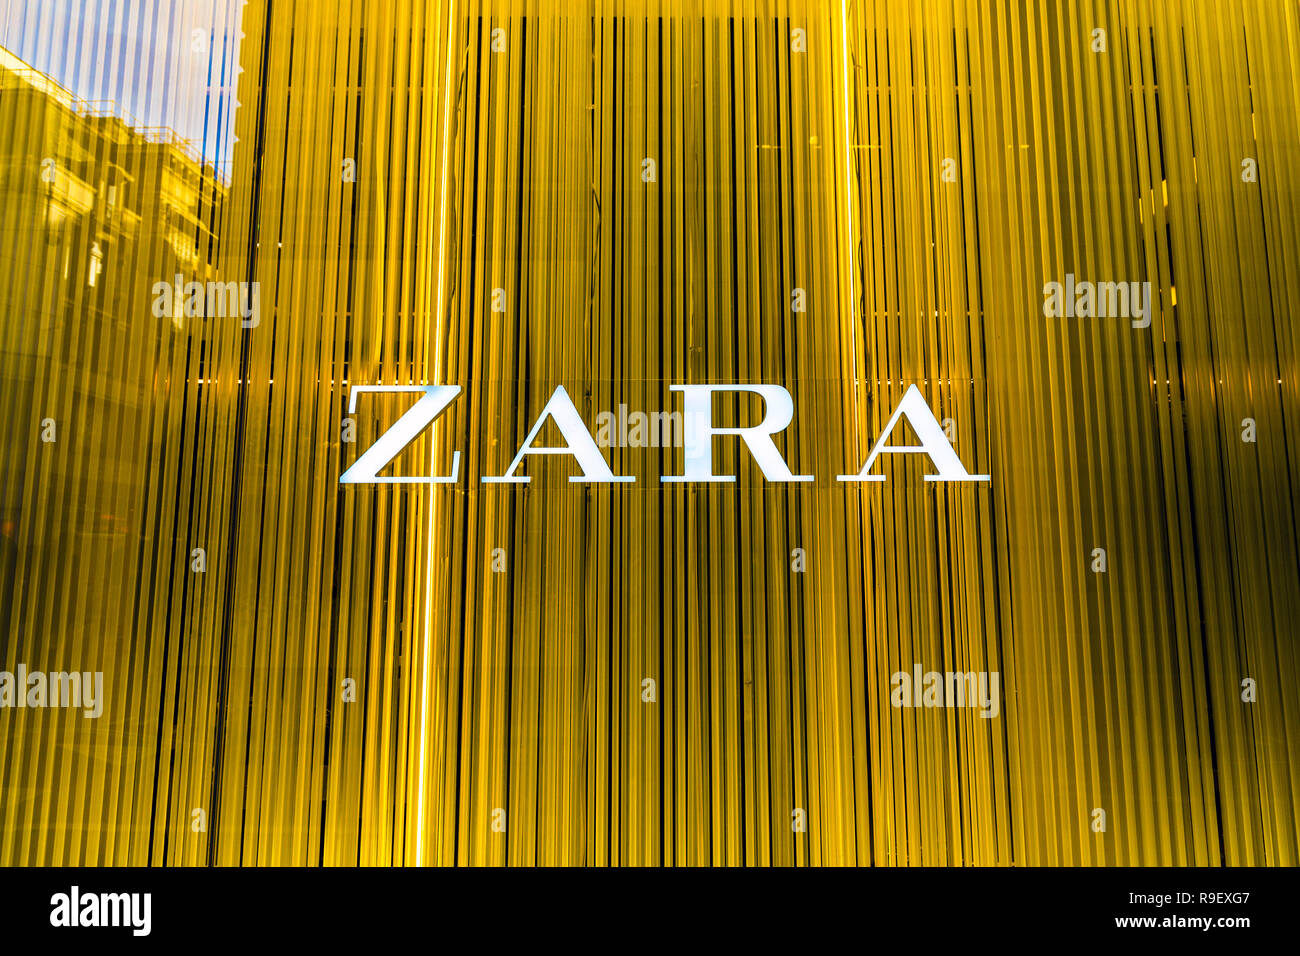 Logo der High Street Modehaus Zara im Store display Fenster, Oxford Street, London, UK Stockfoto